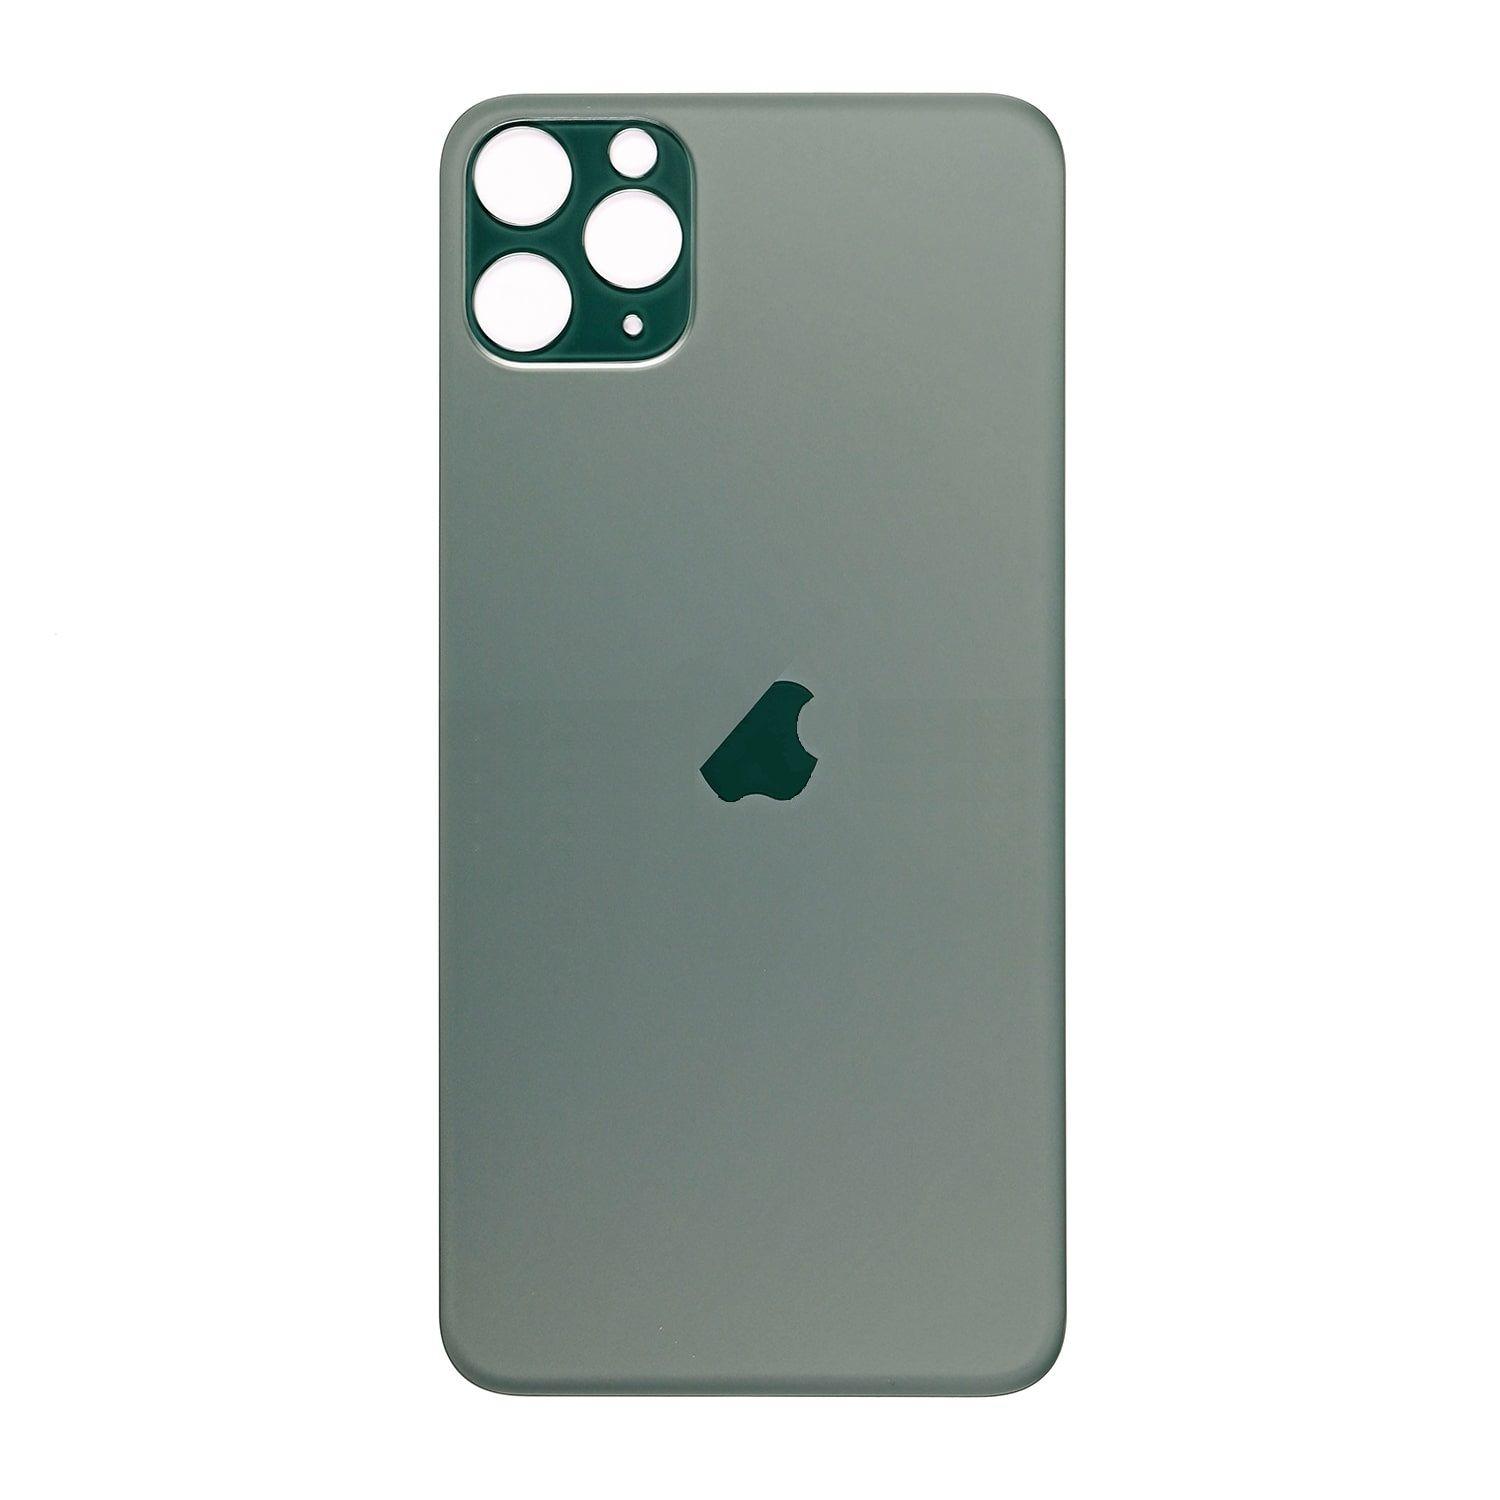 Klapka Iphone 11 pro max zielona bez szkiełka aparatu